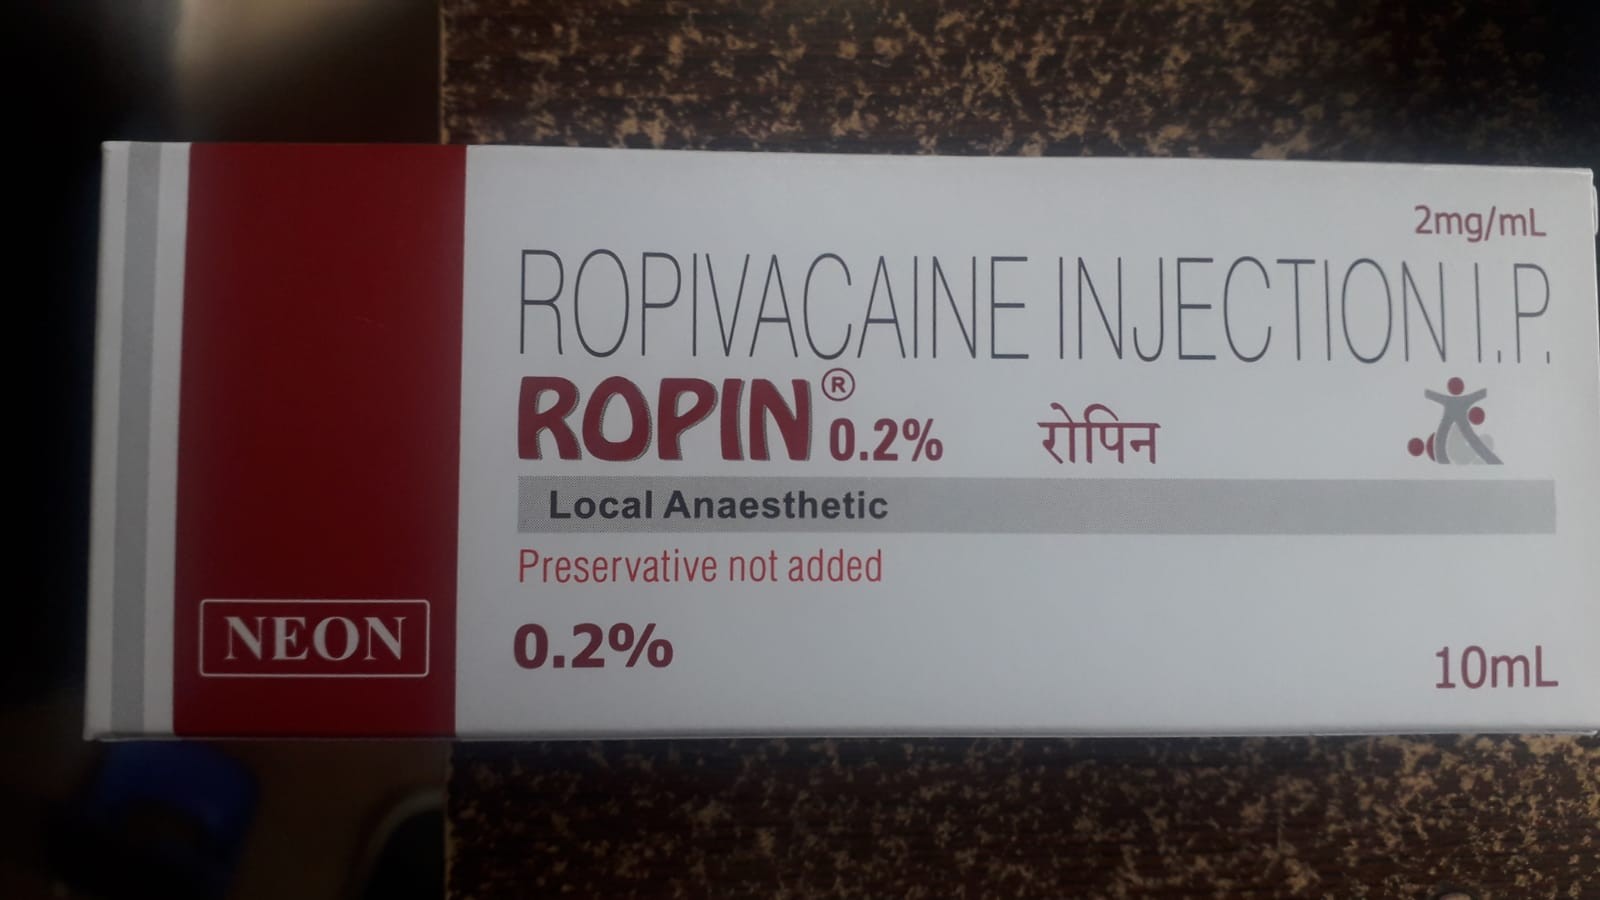 Ropin-0.2%-10ml Inj.